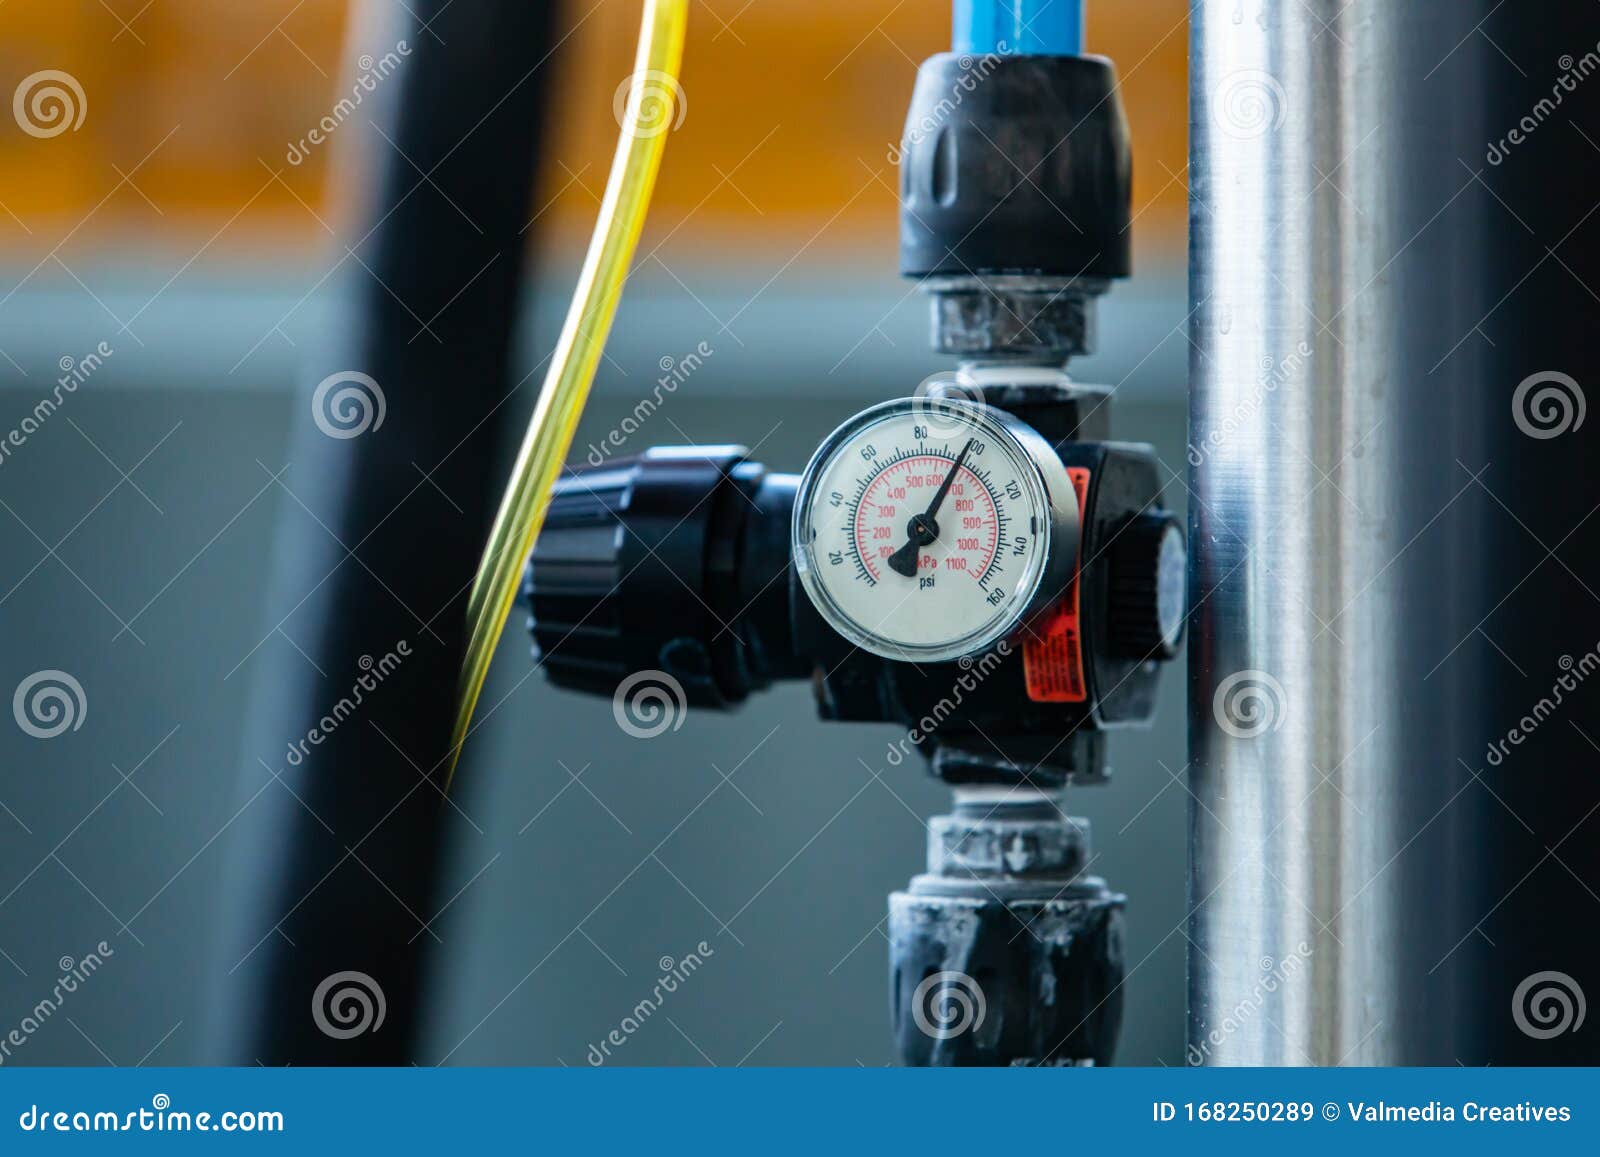 Measuring steam pressure фото 79